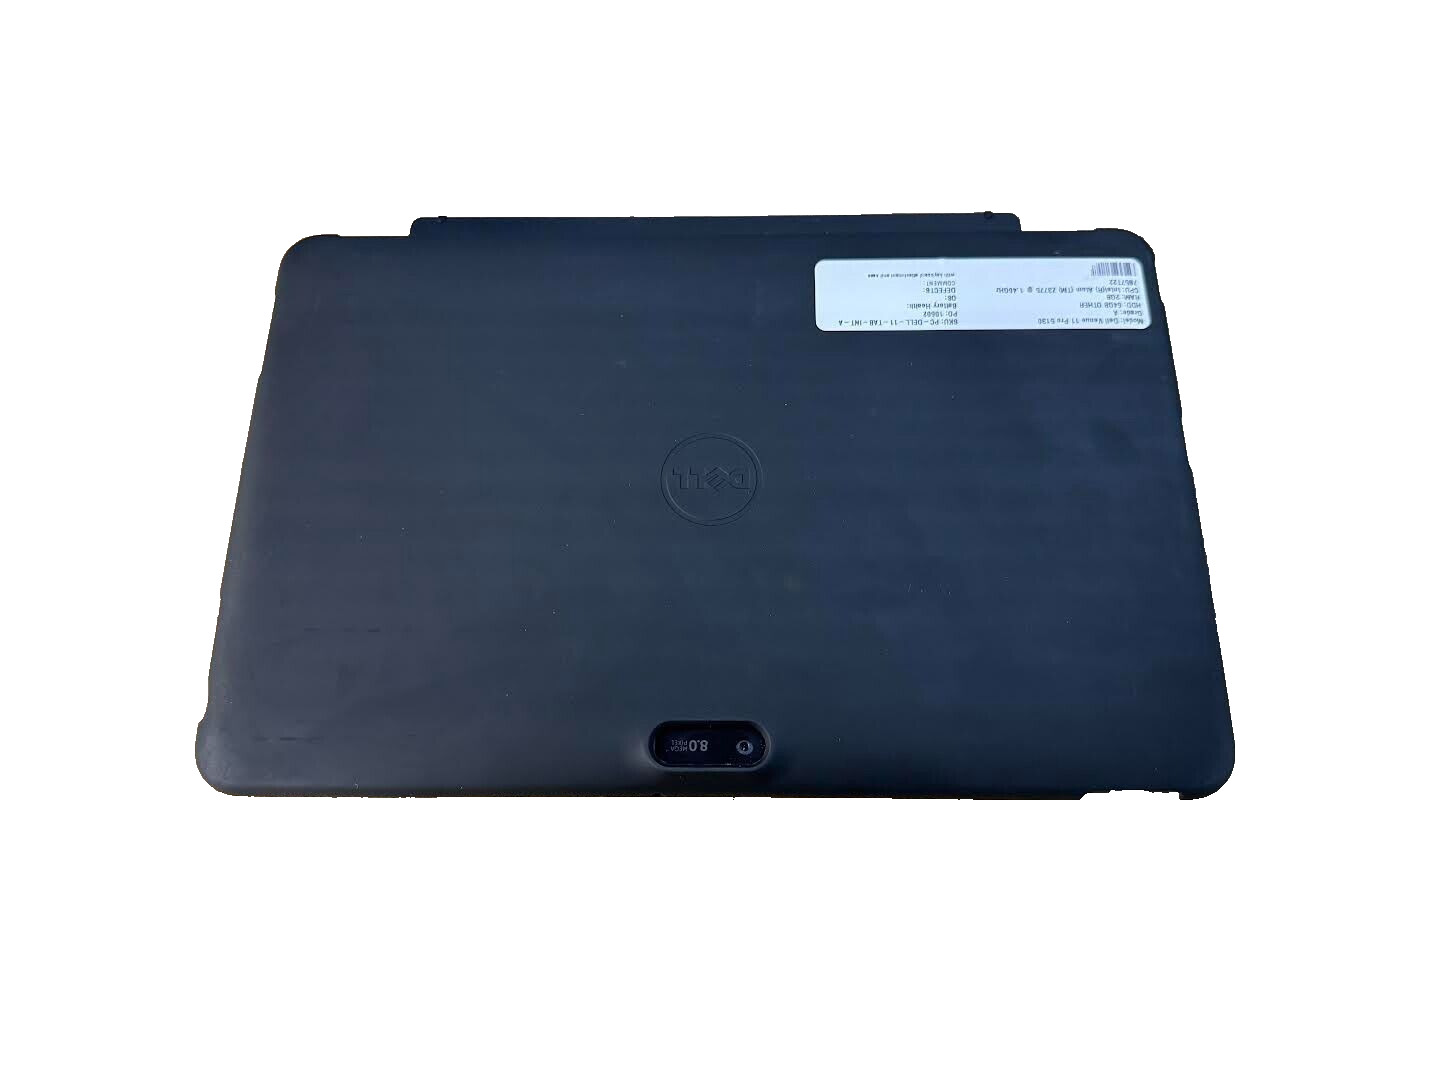 Dell Venue 11 Pro 5130 Tablet 64GB HDD 2GB Intel Z3775 @1.46GHz